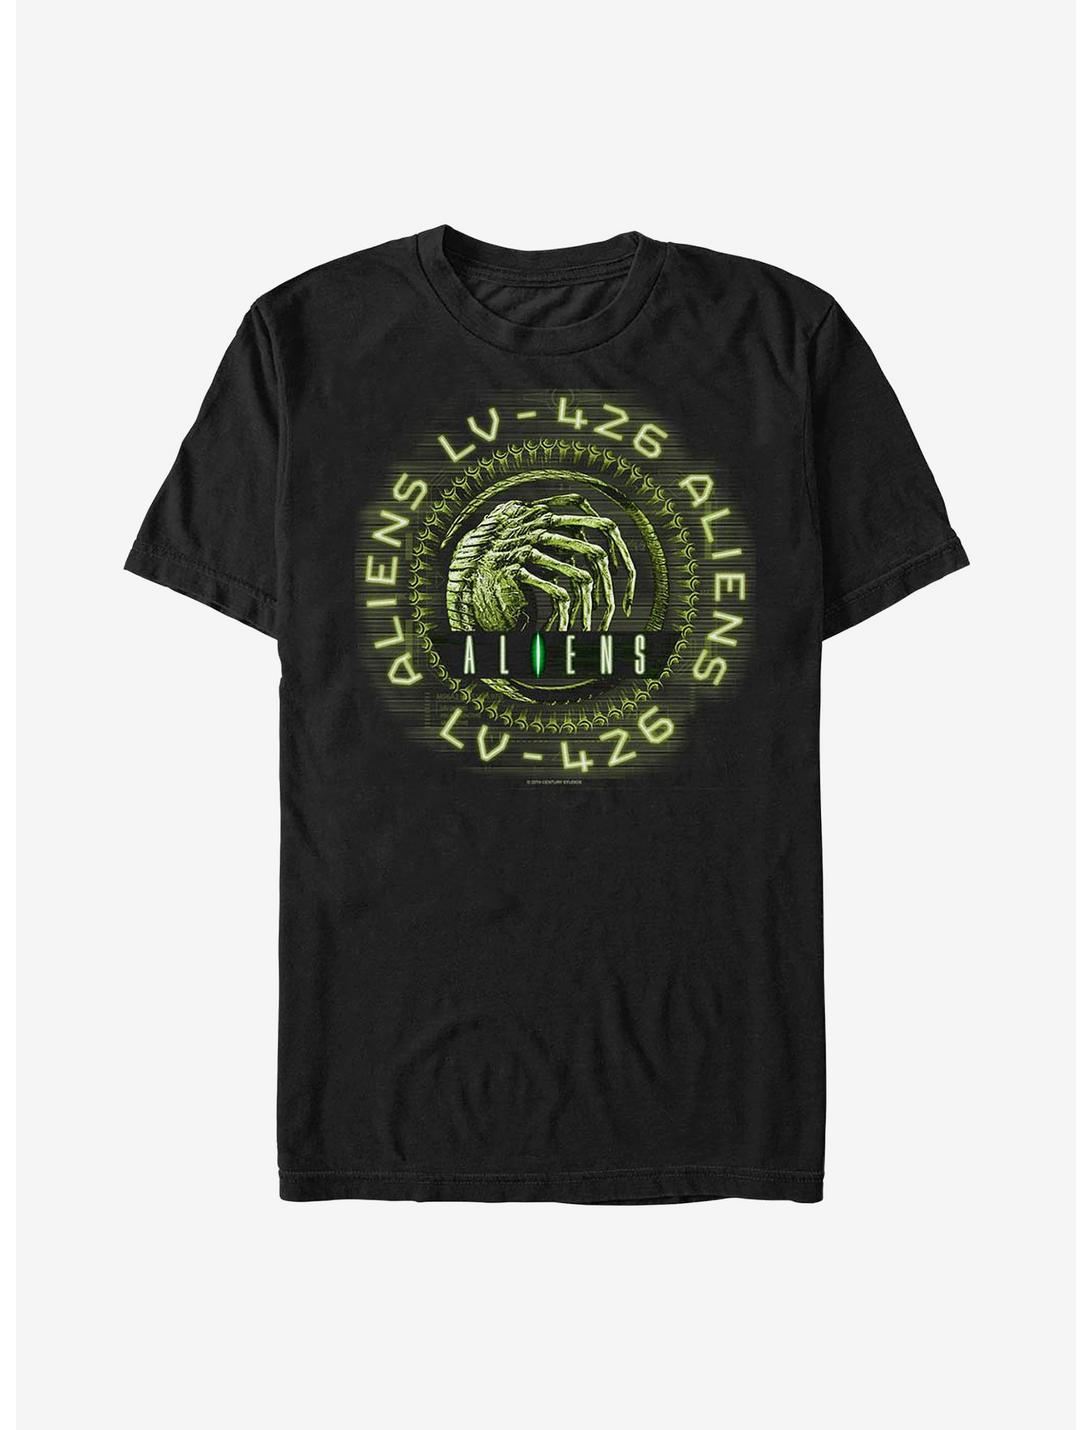 Alien Aliens LV-426 T-Shirt, BLACK, hi-res